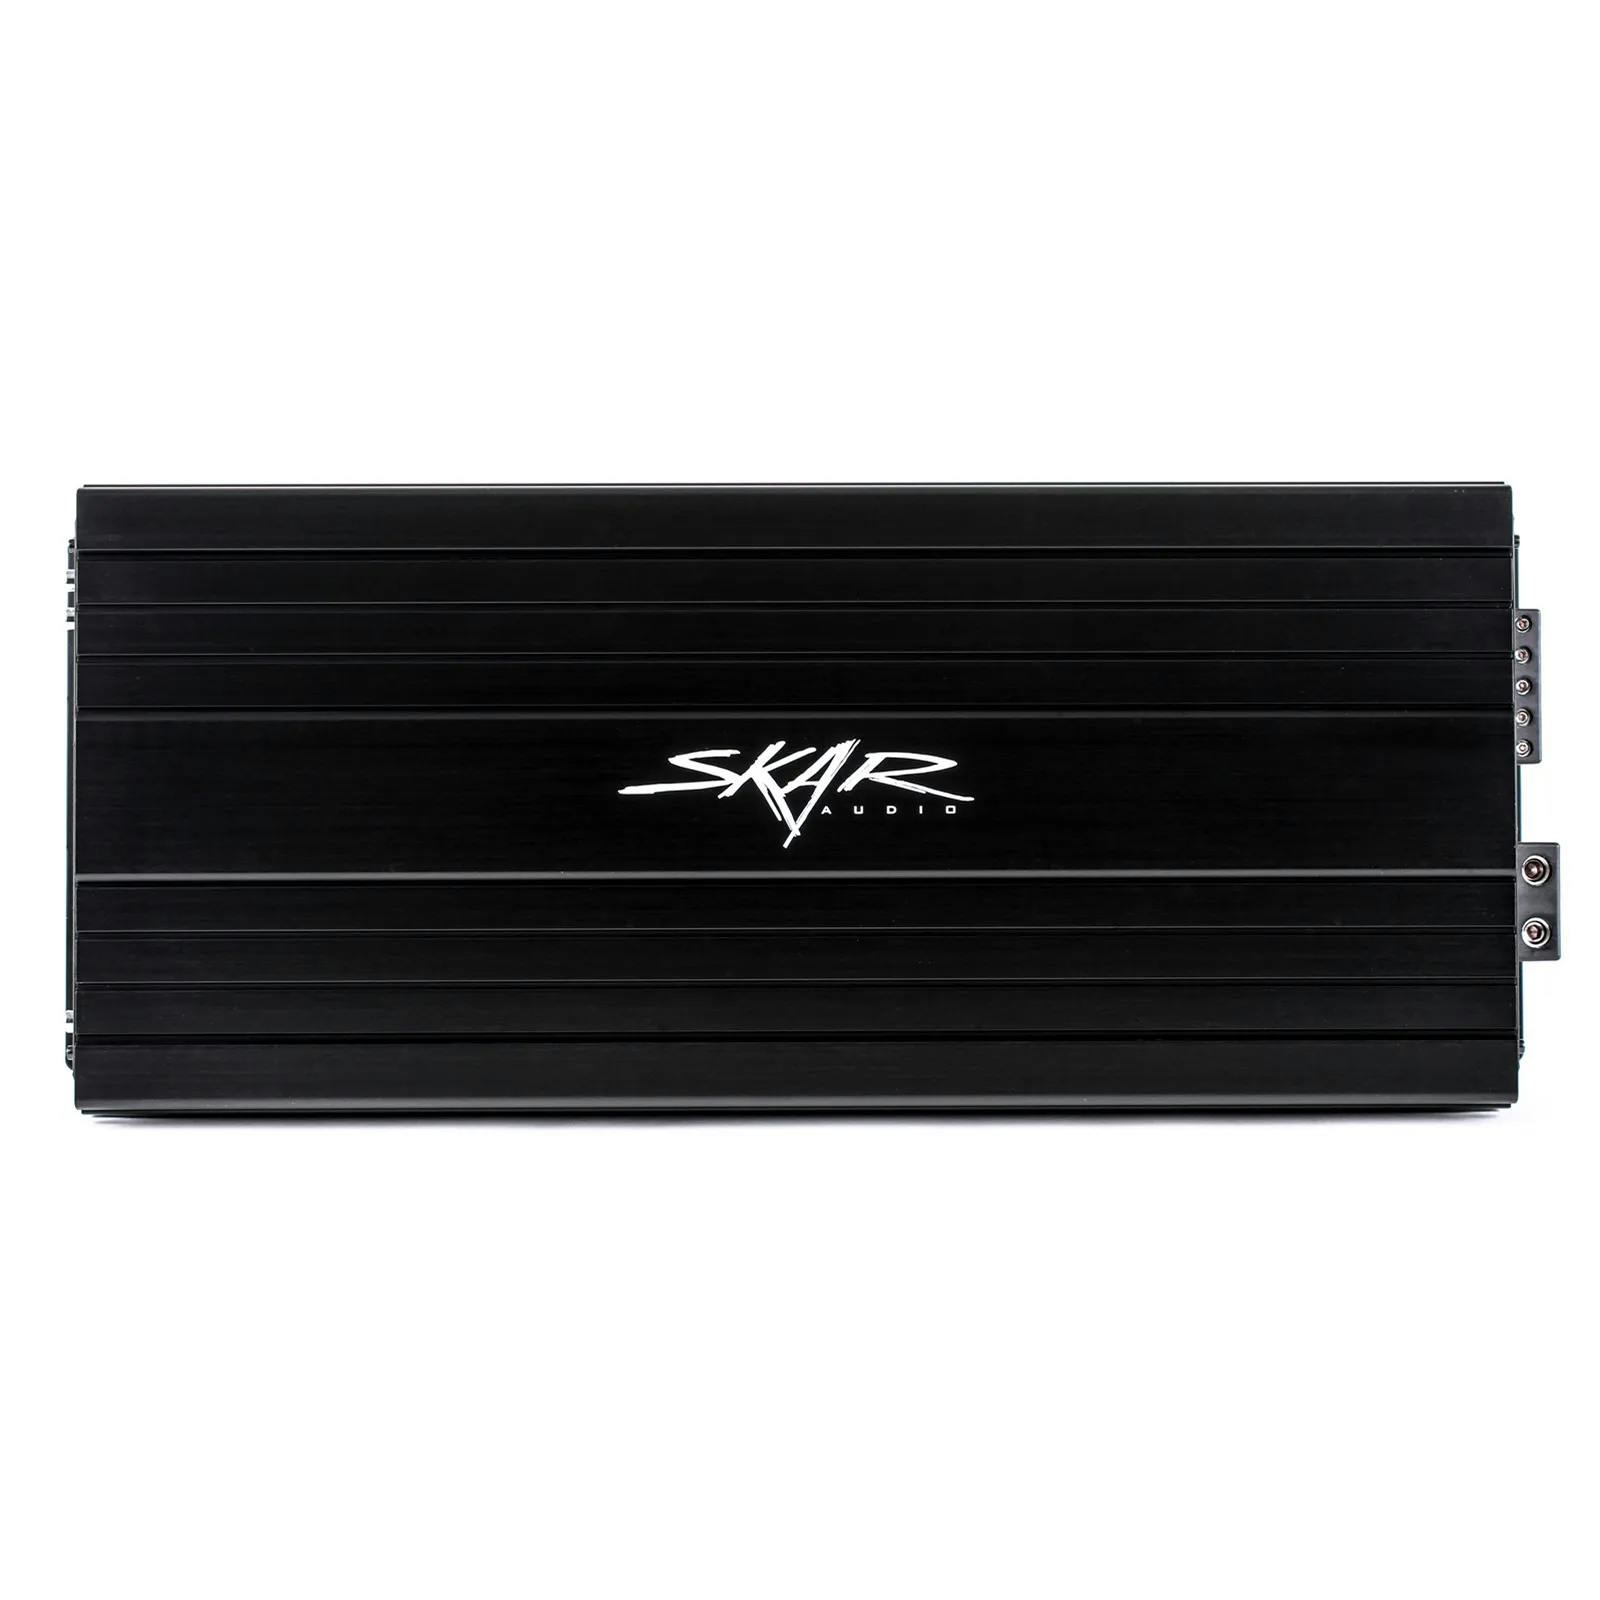 Featured Product Photo for SKv2-2500.1D | 2,500 Watt Monoblock Car Amplifier